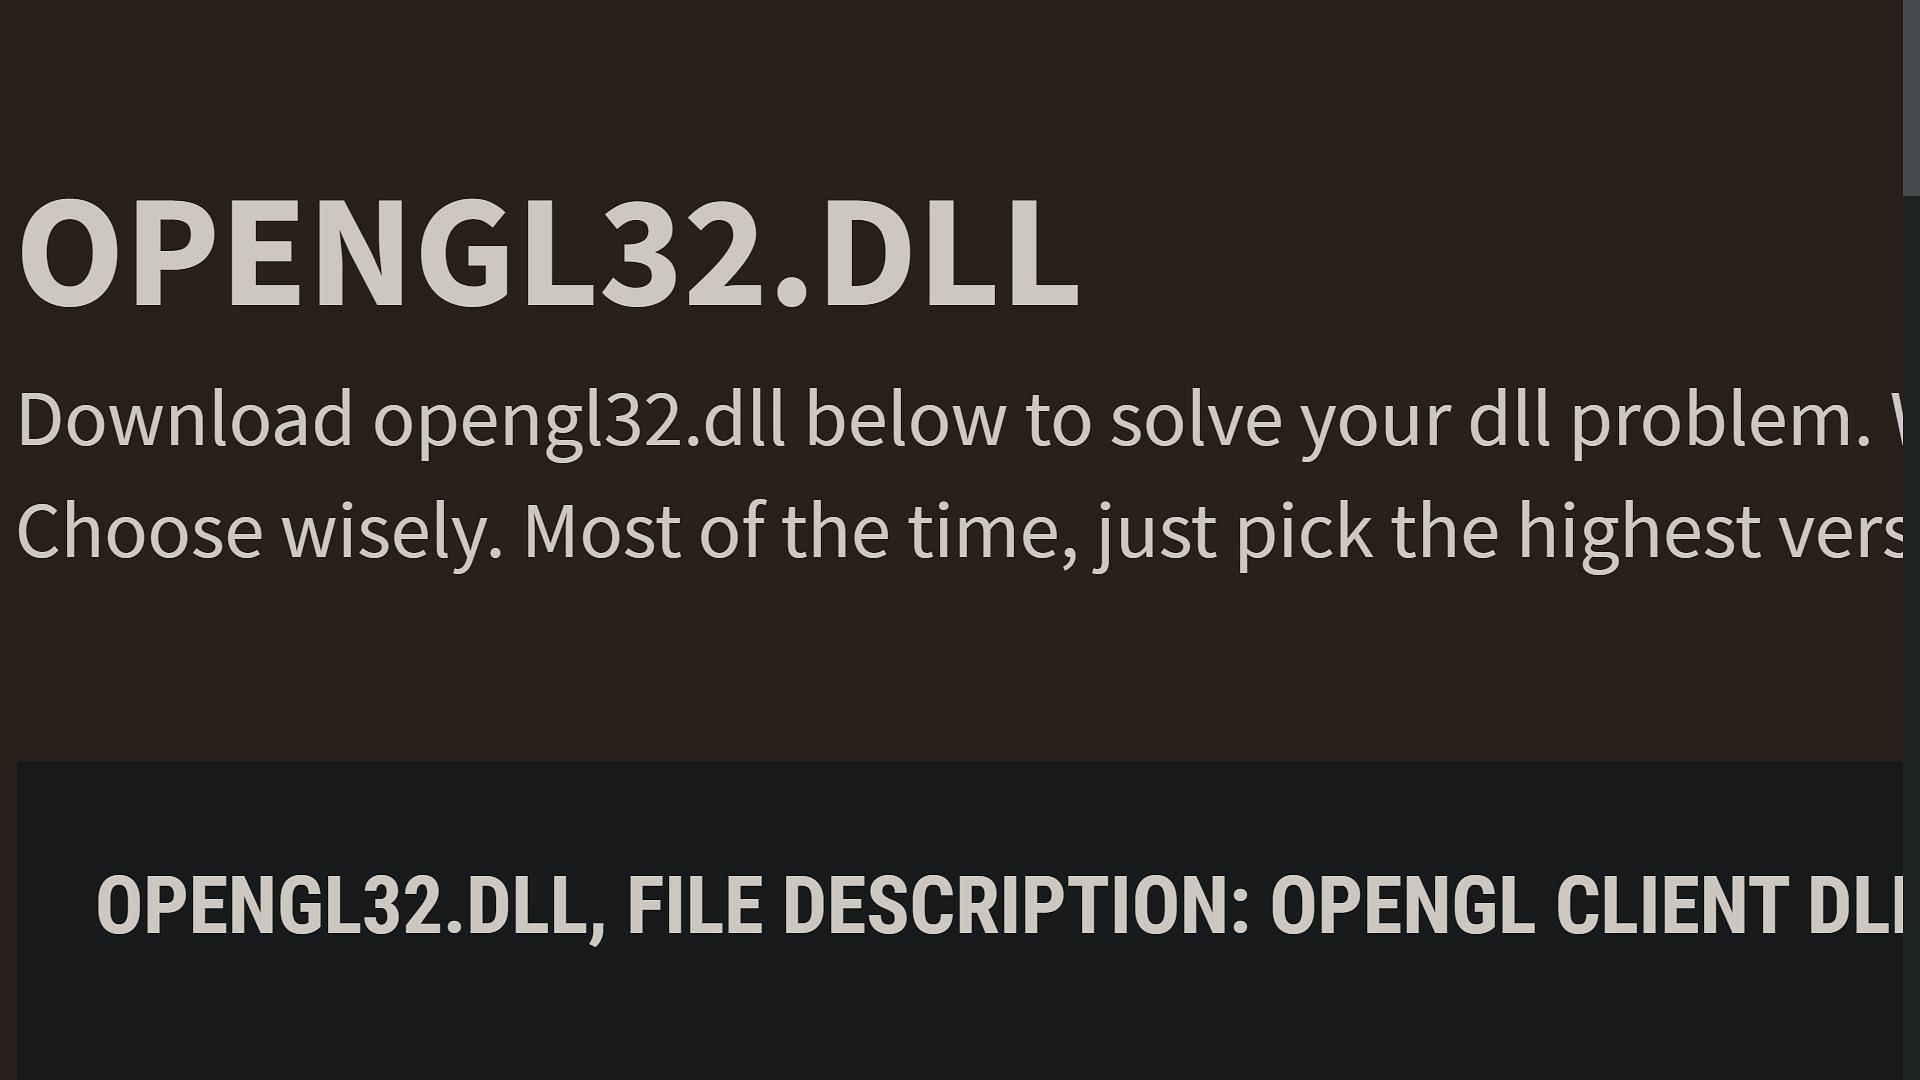 Roblox Player - System Error - OPENGL32.DLL Was Not Found - Fix - 2022 